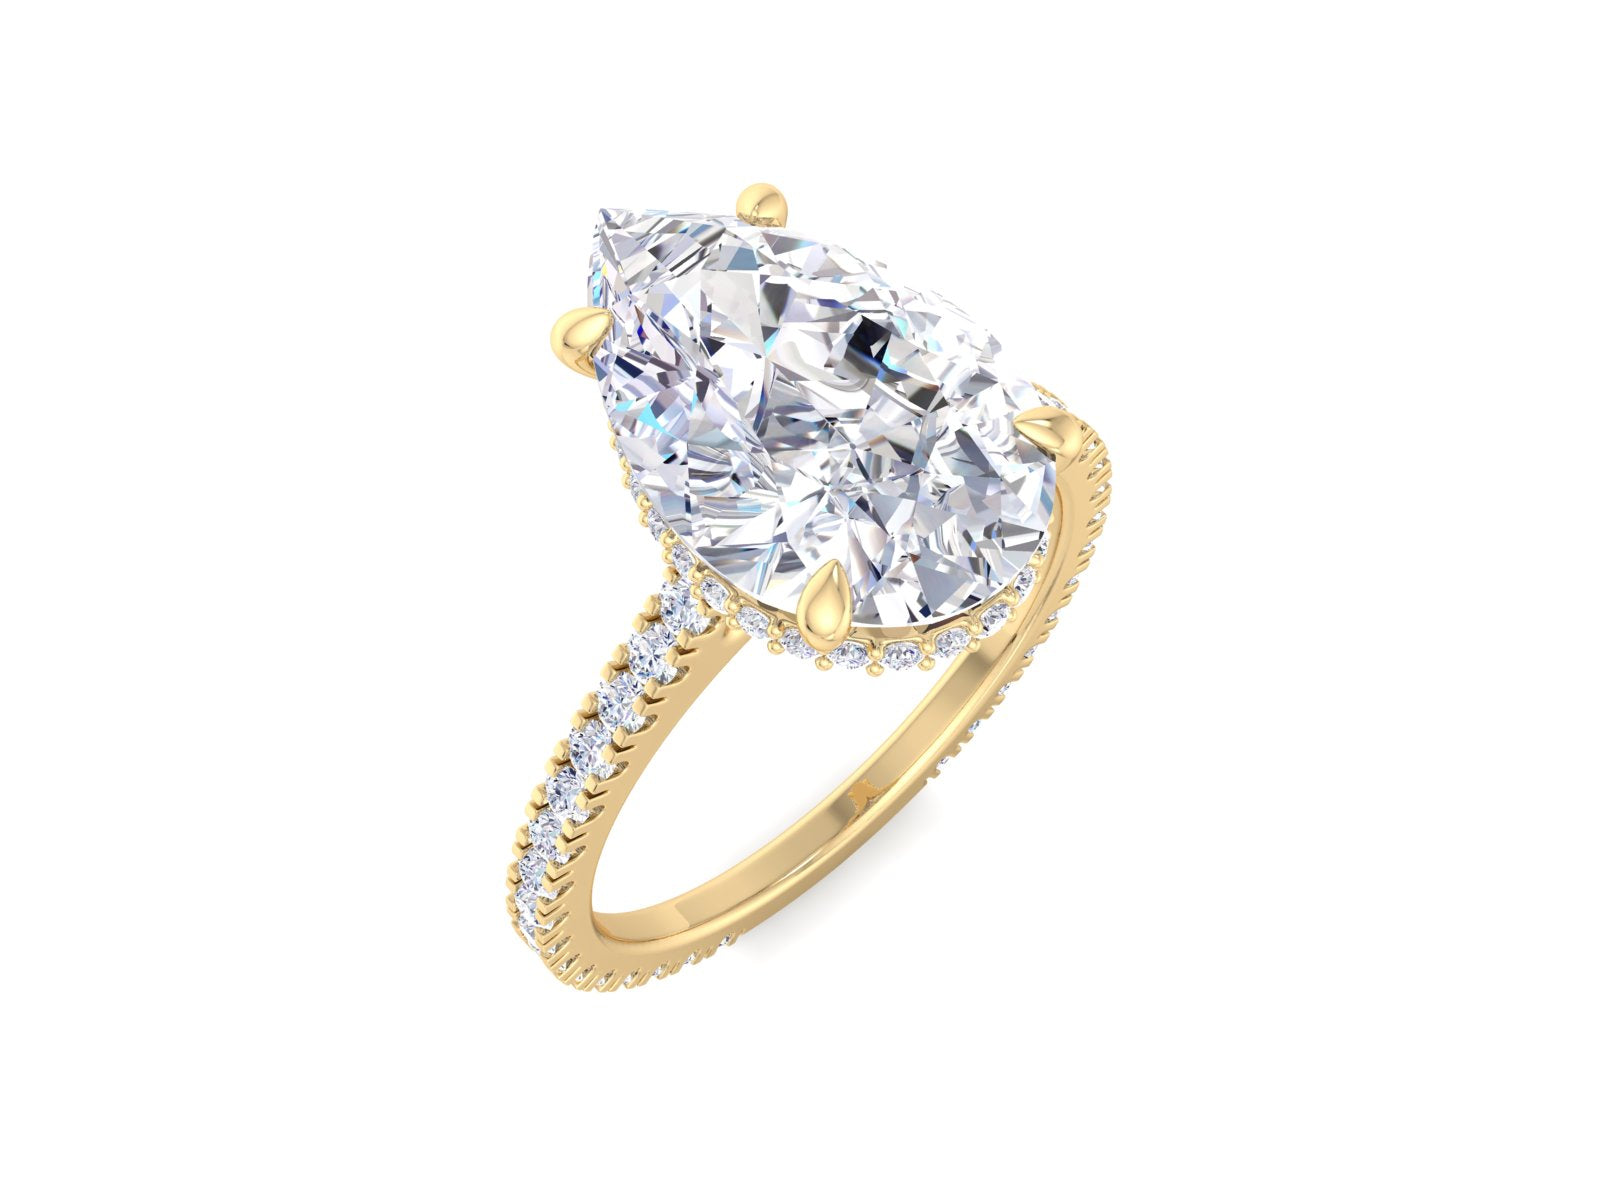 4.2CT Pear Moissanite Wedding Ring/ Hidden Halo Pear Shaped Moissanite Engagement Ring